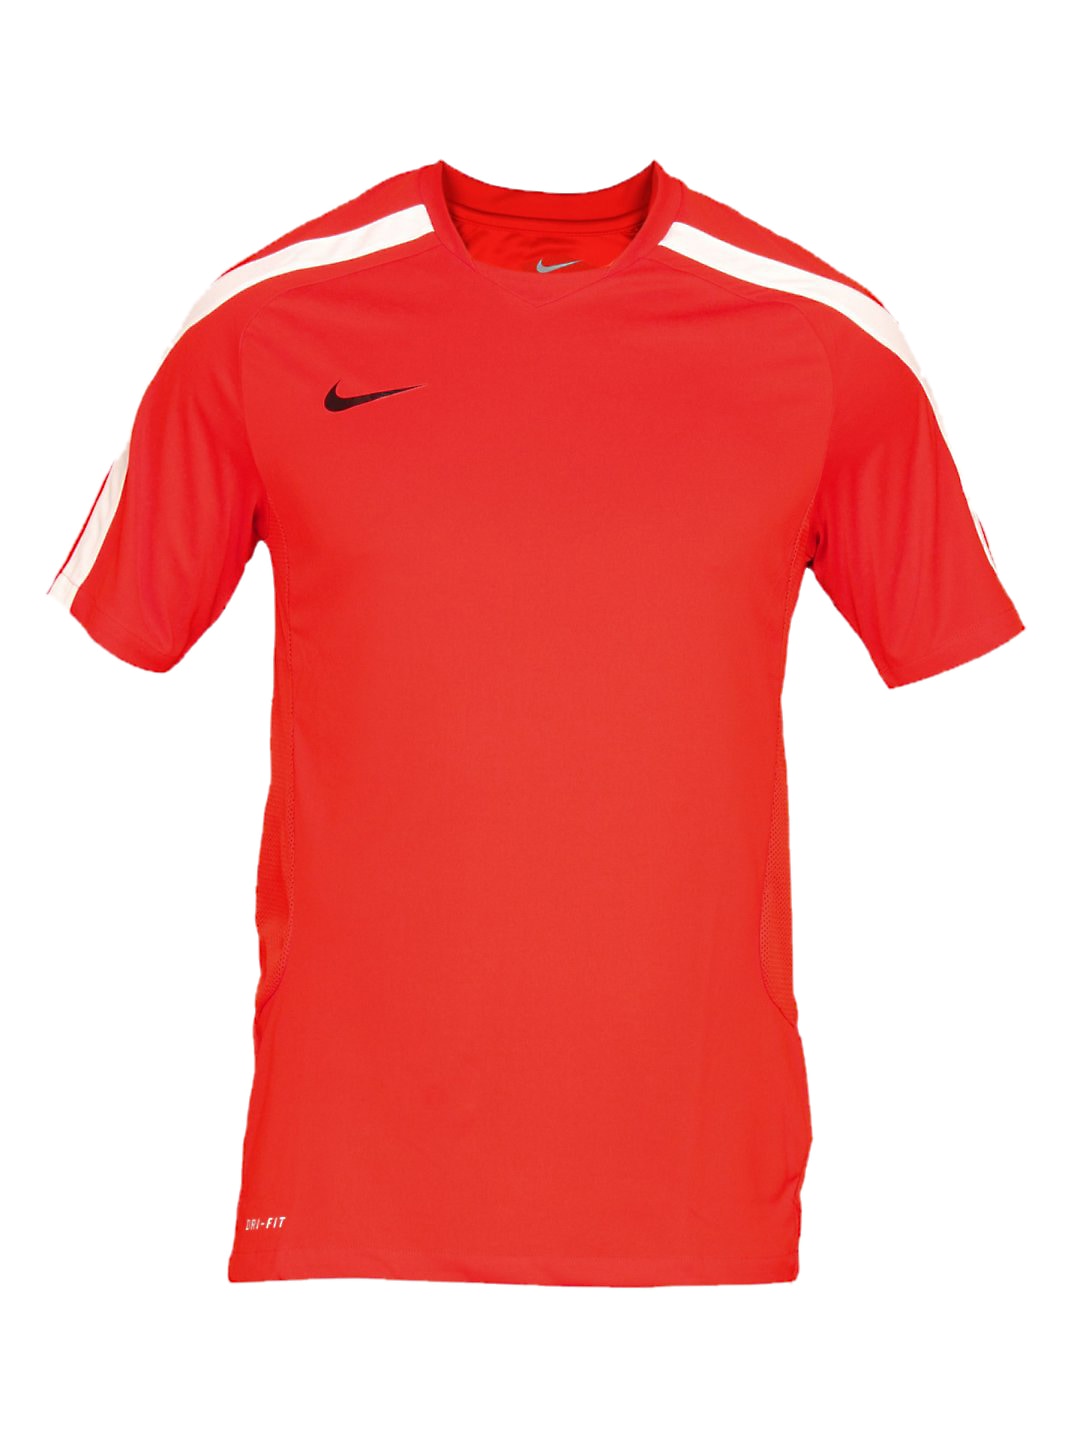 Nike Men's Training Red T-shirt